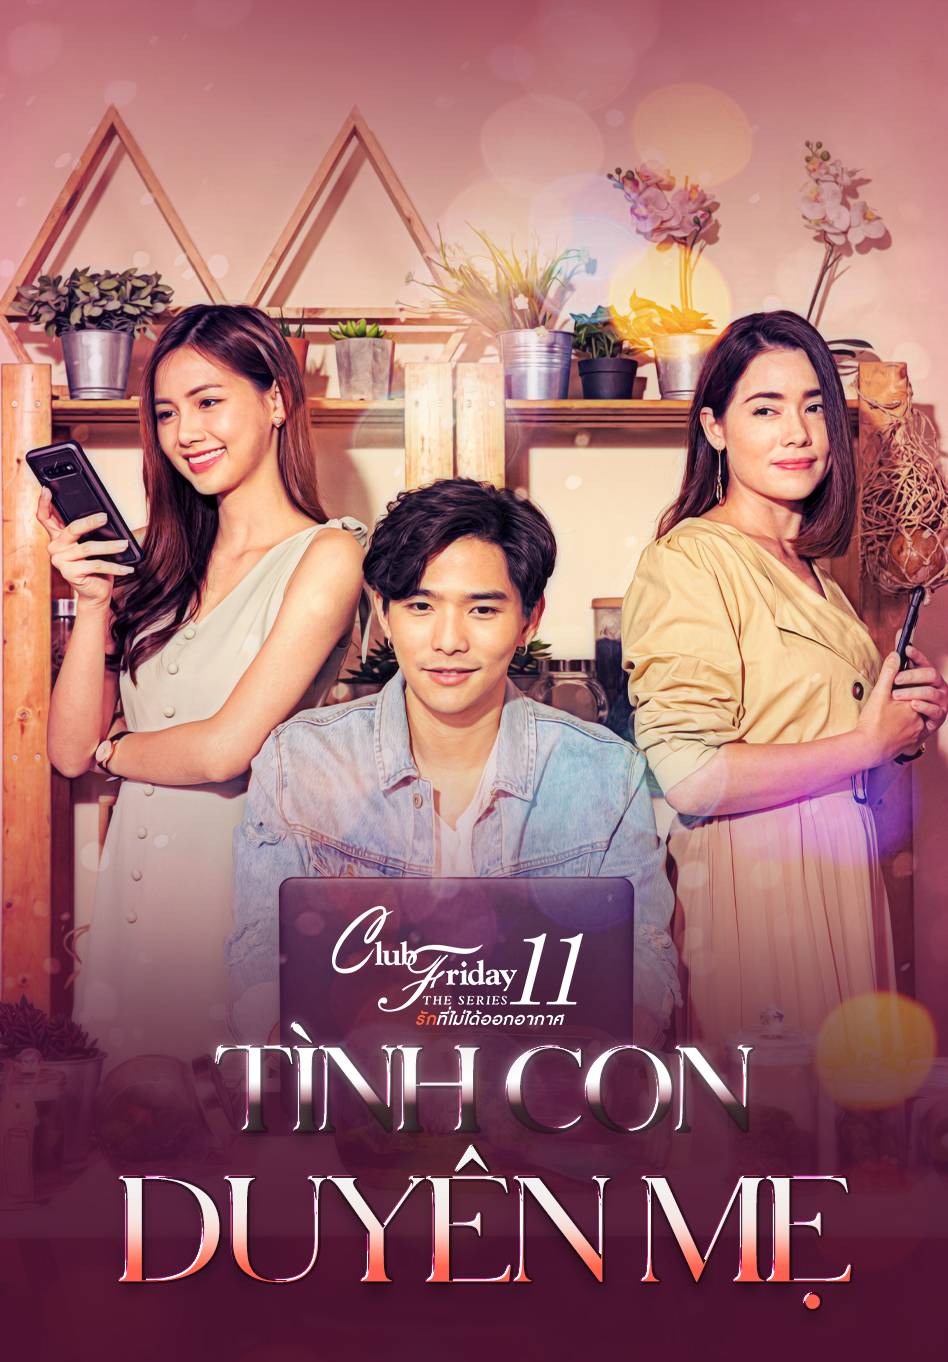 Xem Phim Tình Con Duyên Mẹ Vietsub Full HD | Club Friday The Series 11: Ruk  Mai Mee Tua Ton | TrueID Vietnam